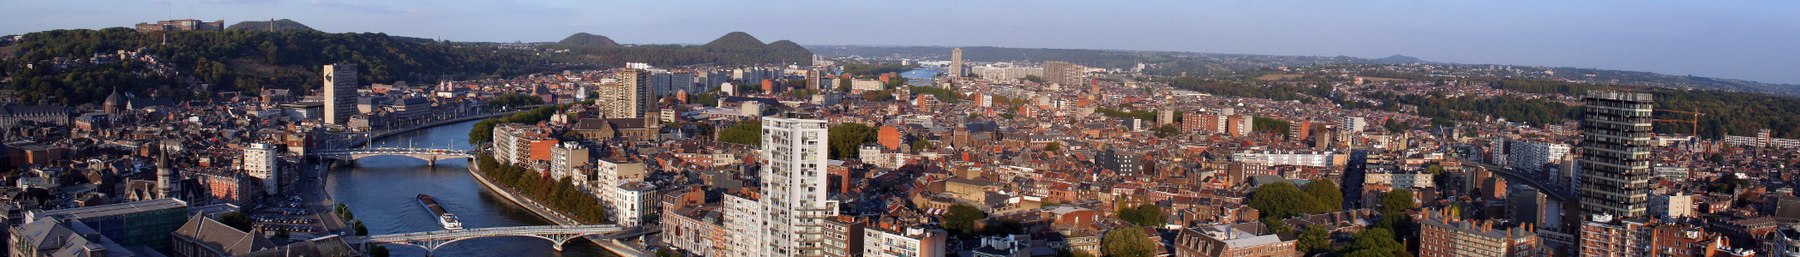 A view of Liège, Belgium